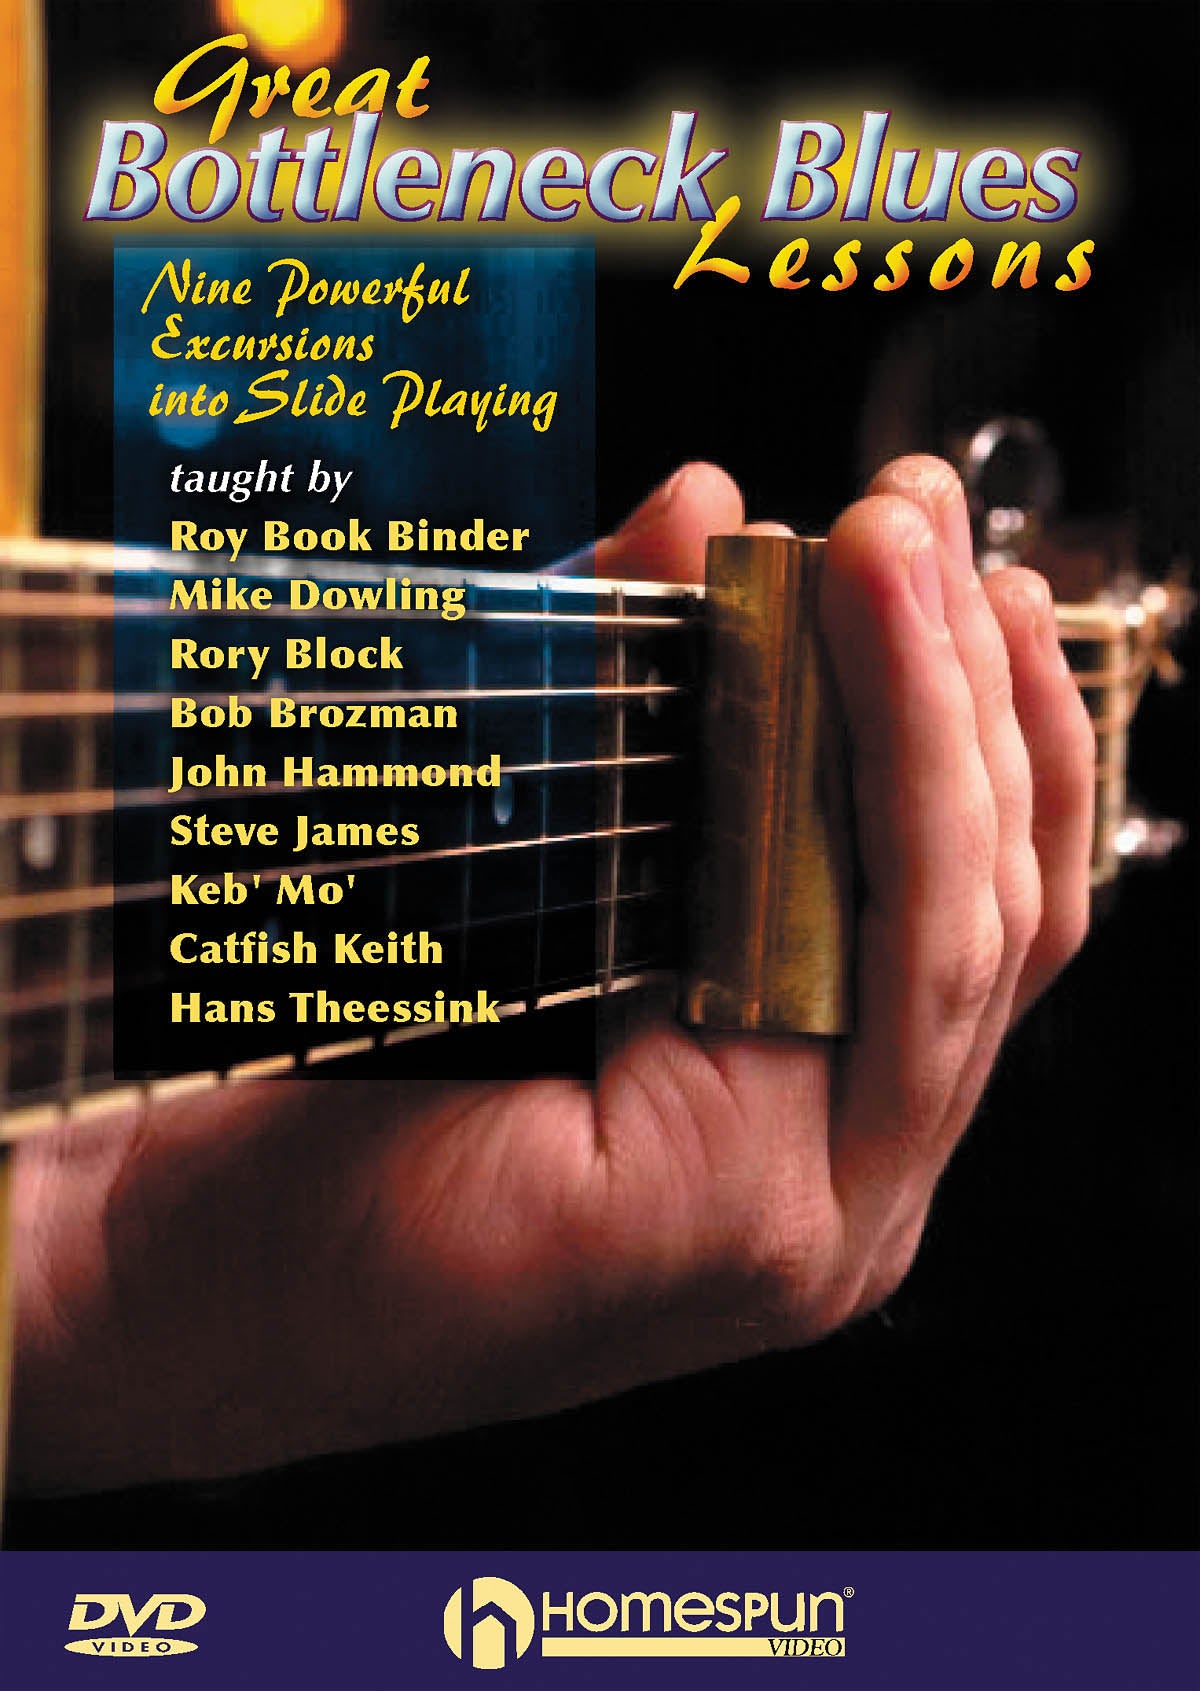 Image 1 of DVD - Great Bottleneck Blues Lessons - SKU# 300-DVD367 : Product Type Media : Elderly Instruments